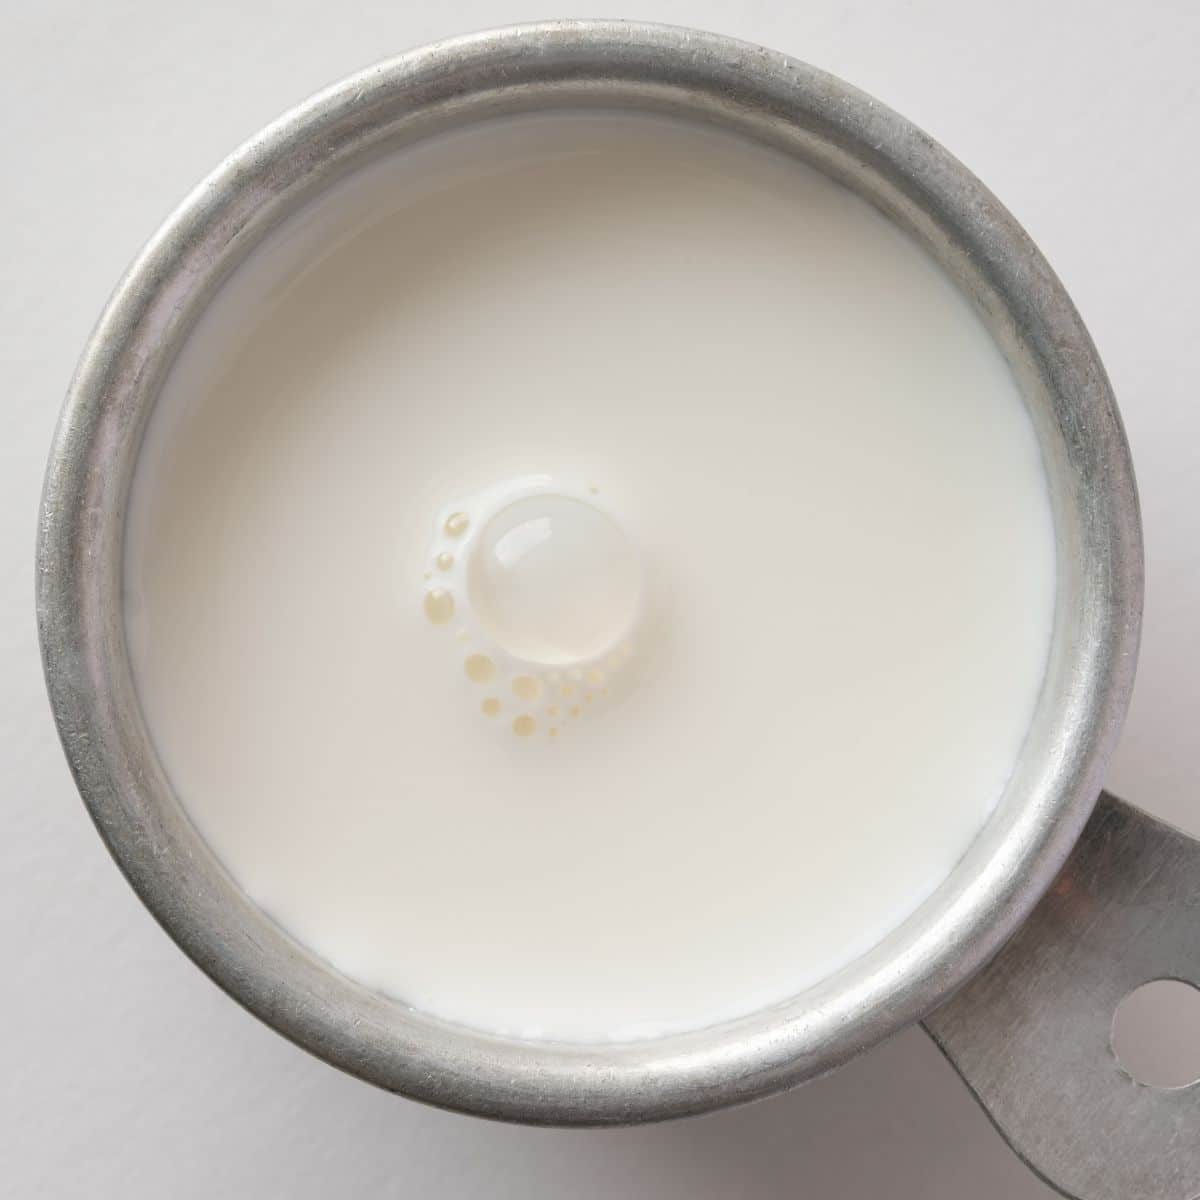 Heavy cream in a measuring cup.